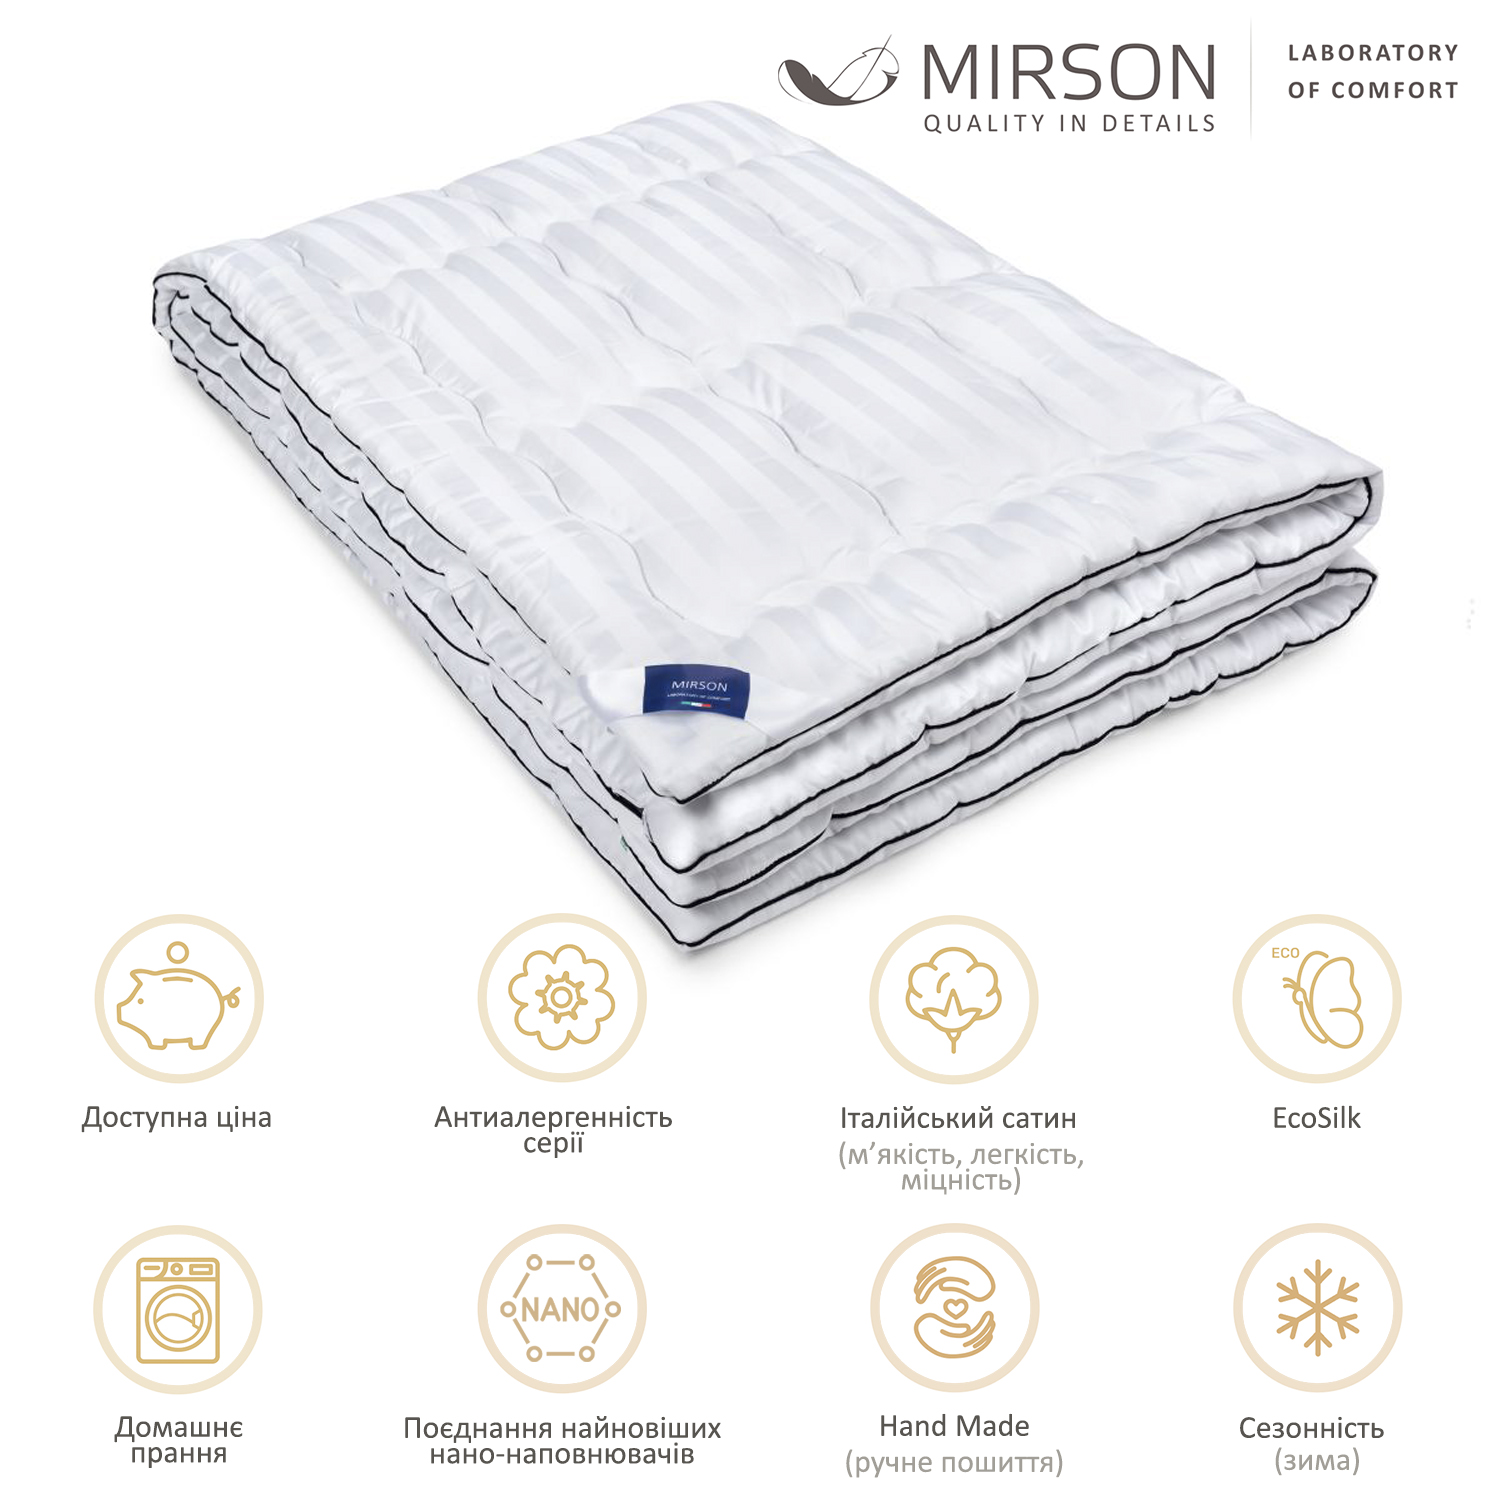 Одеяло антиаллергенное MirSon Premium Royal Pearl Hand Made №069, зимнее, 140x205 см, белое (58590058) - фото 5